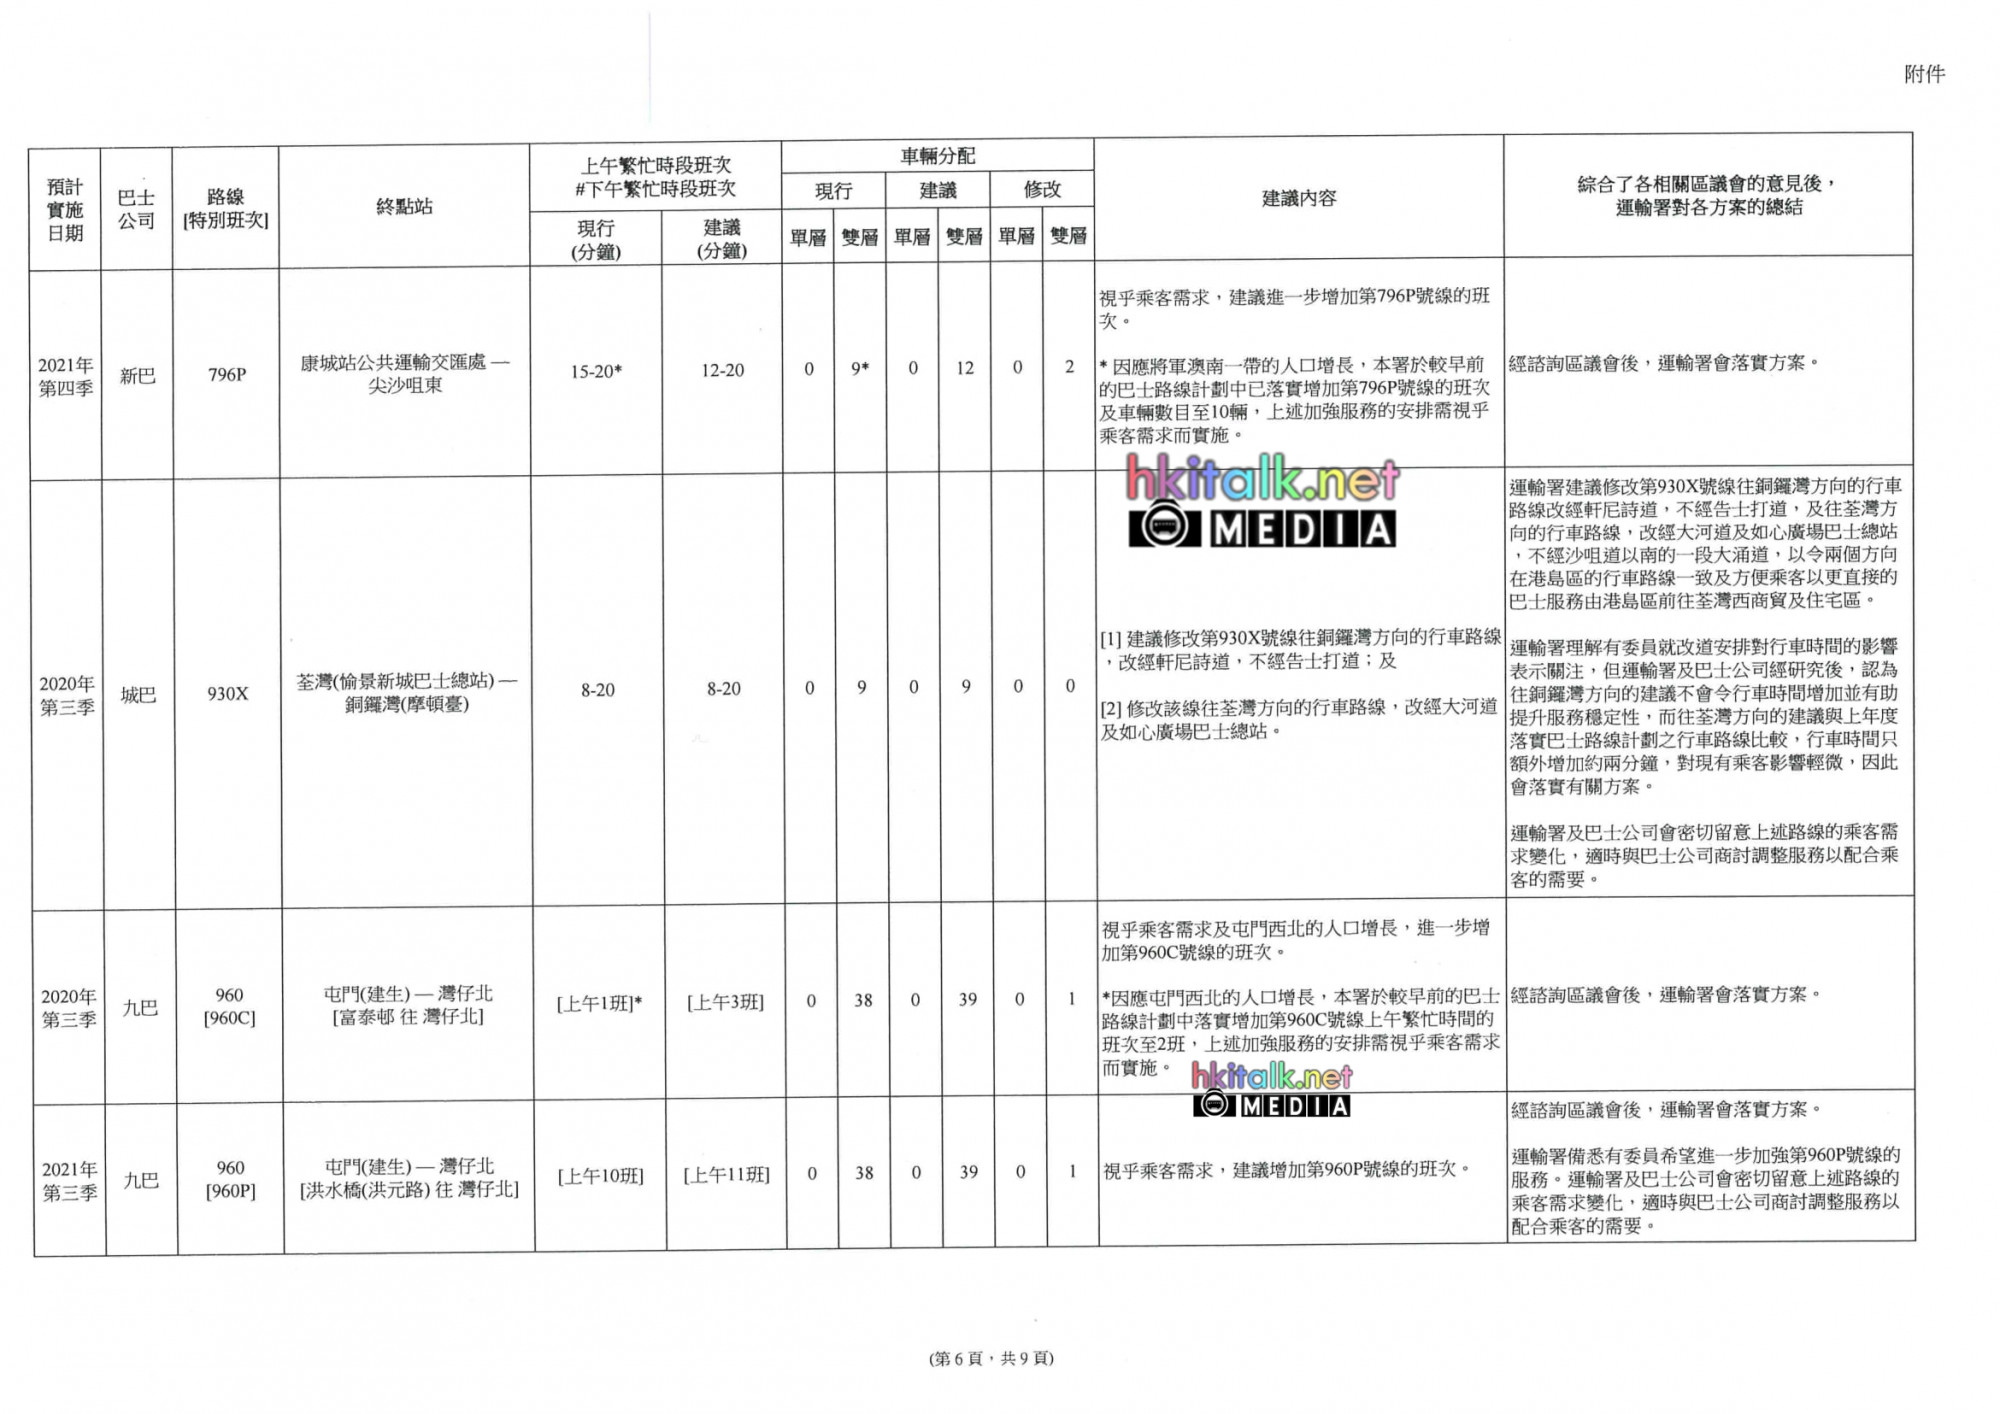 Route Planning Programme 2020-2021 for Yau Tsim Mong-07.jpg